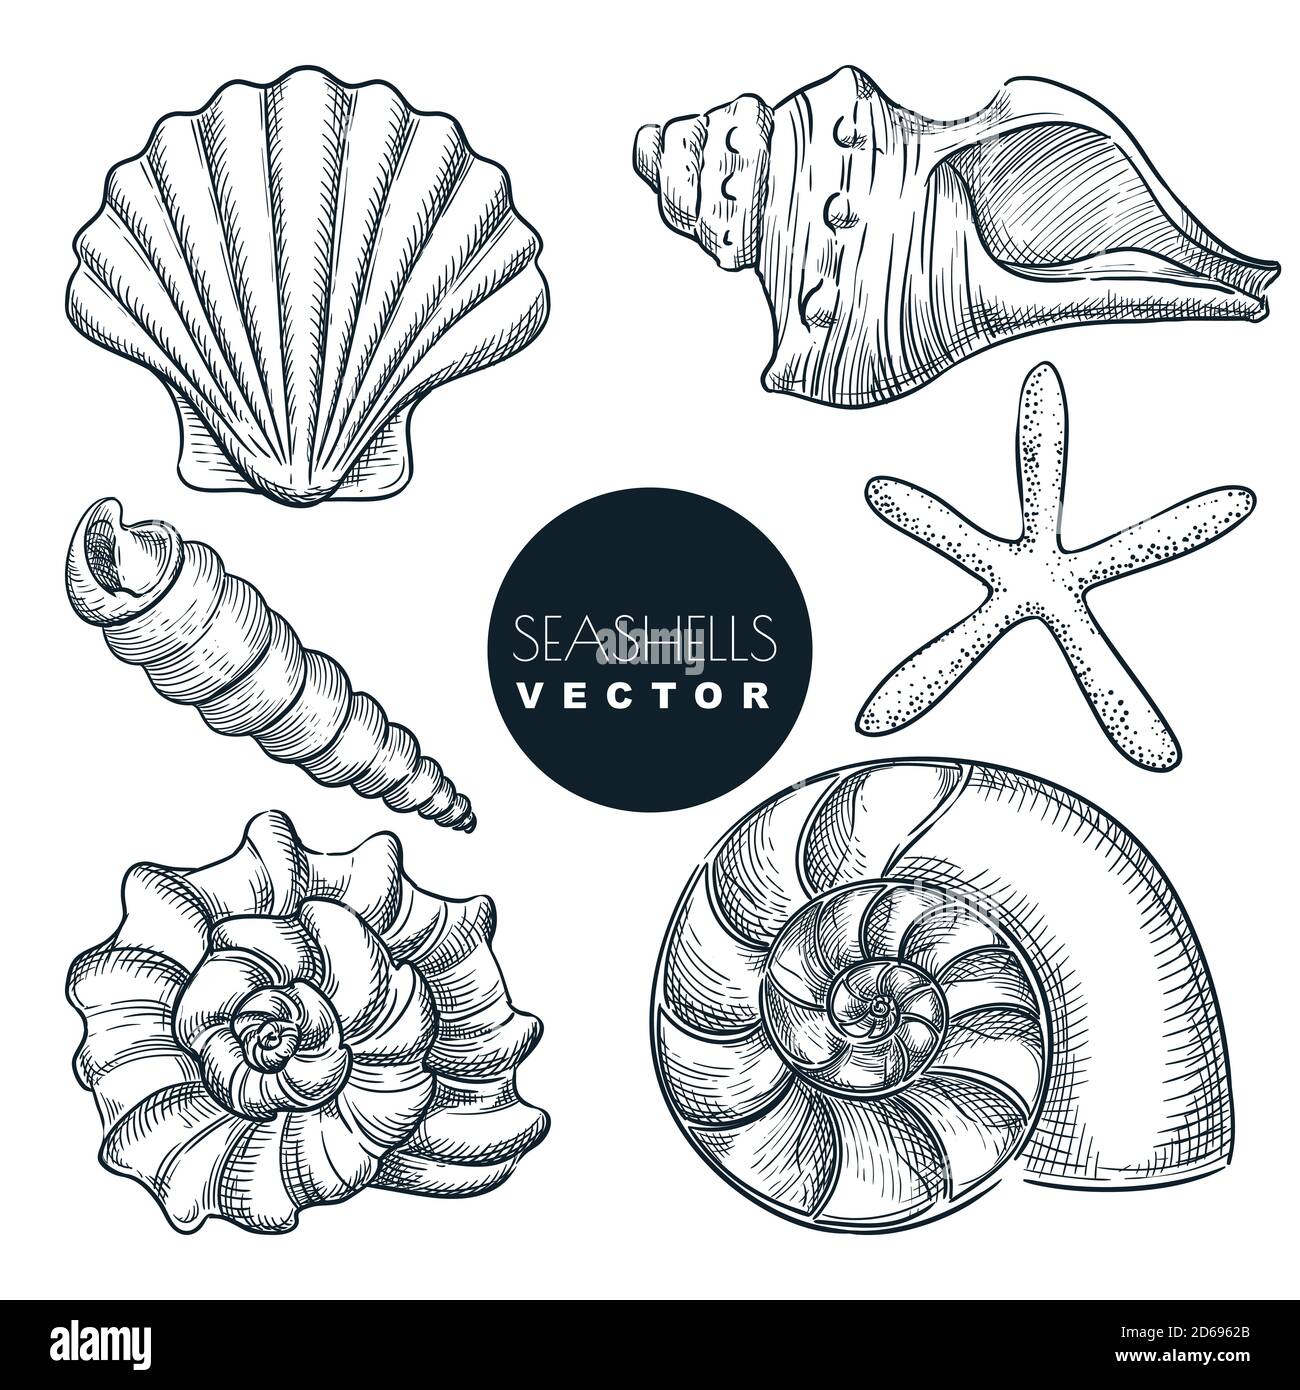 Seashells collection. Vector hand drawn sketch illustration